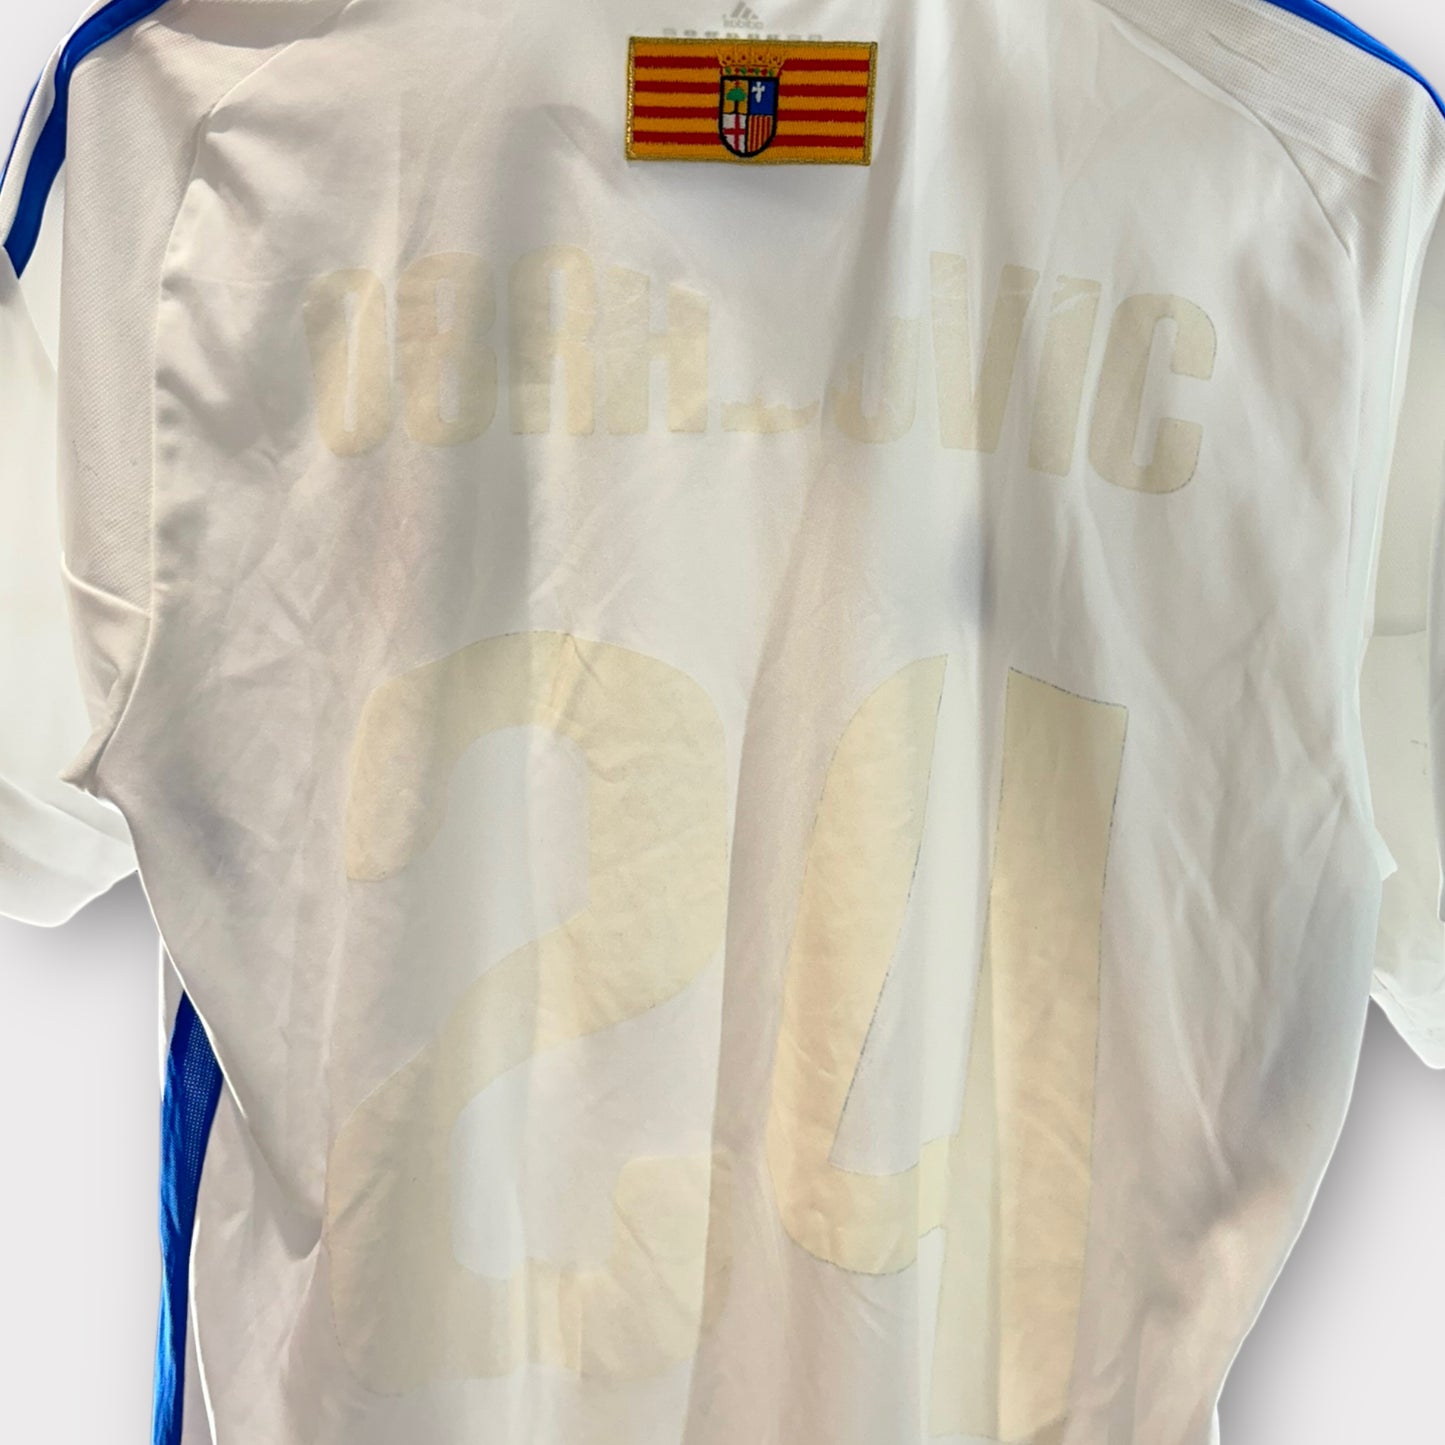 Real Zaragoza 2011/12 Home Shirt (Medium)